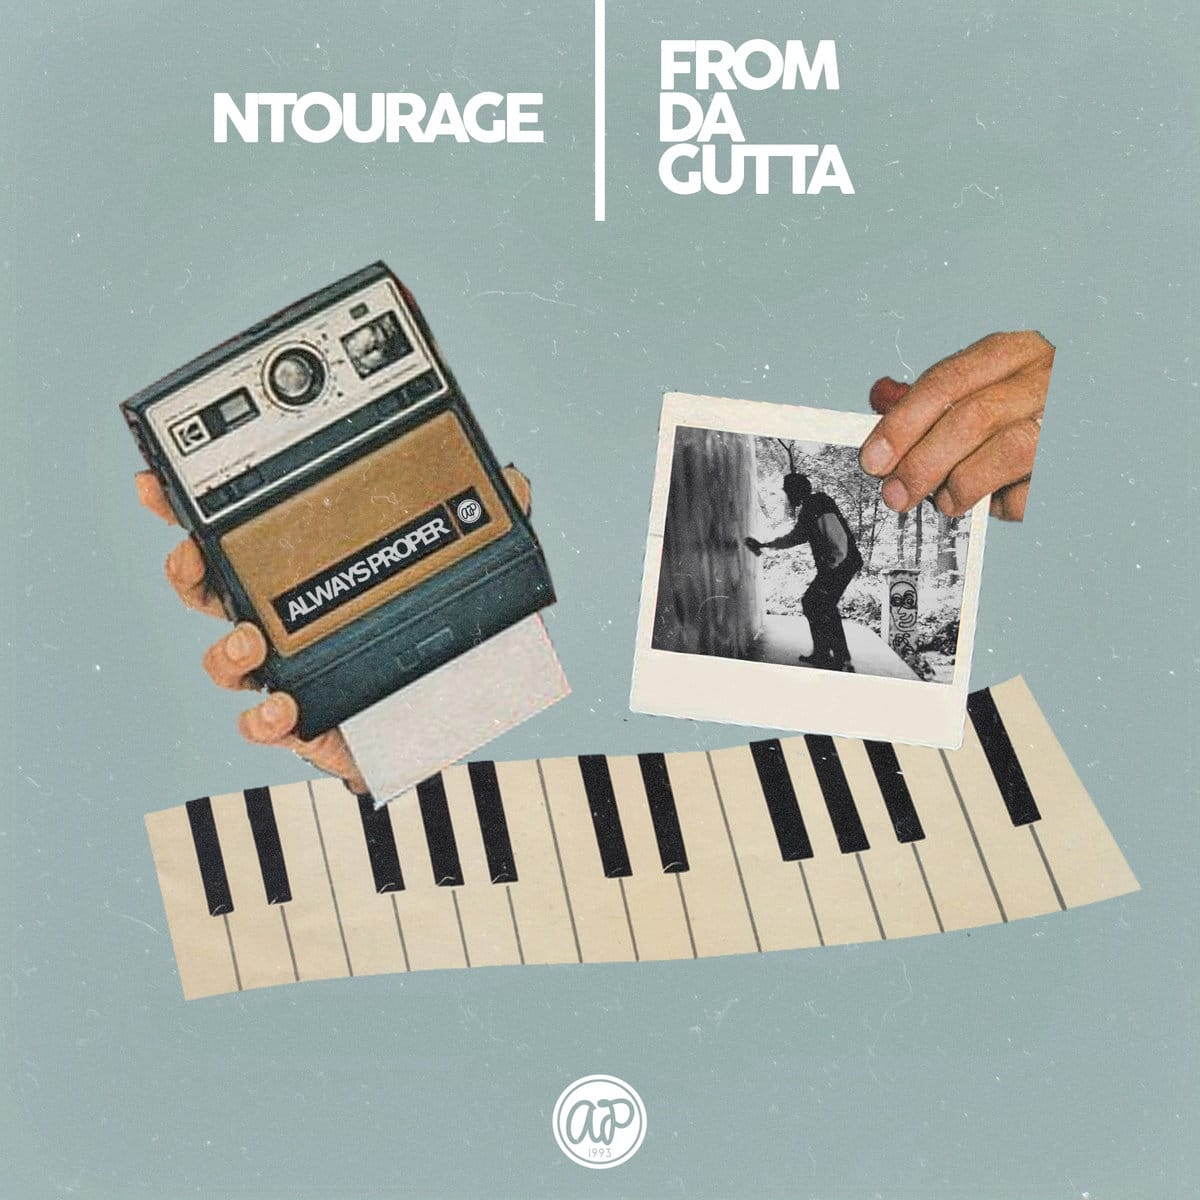 Ntourage - "From Da Gutta" (Release)